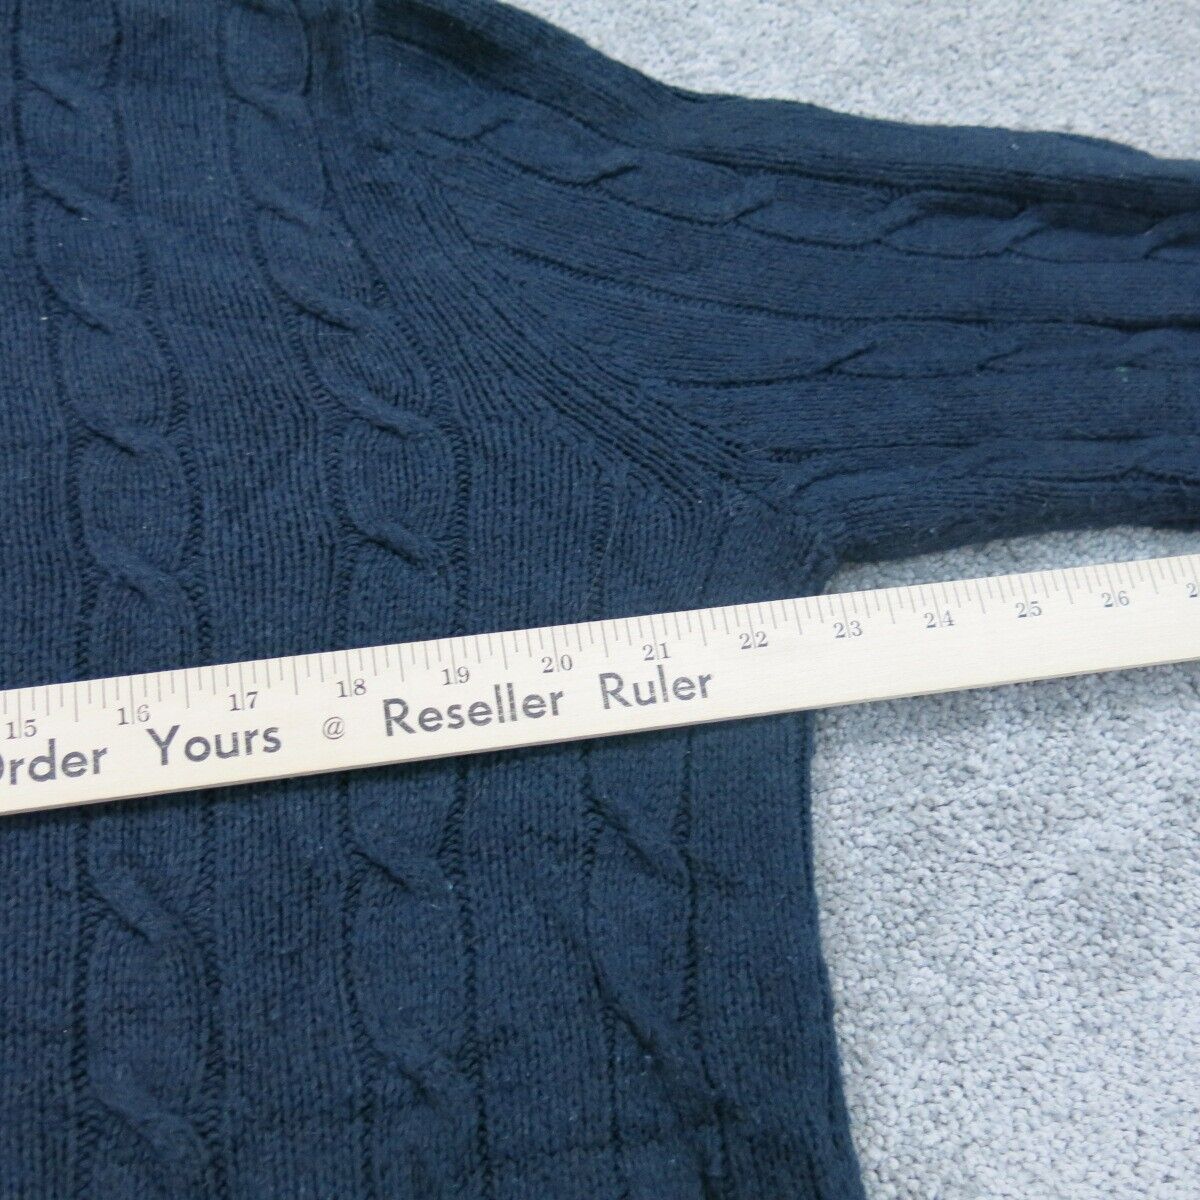 Banana Republic Womens Knitted Sweater Long Sleeve 3 Button Blue Size Medium